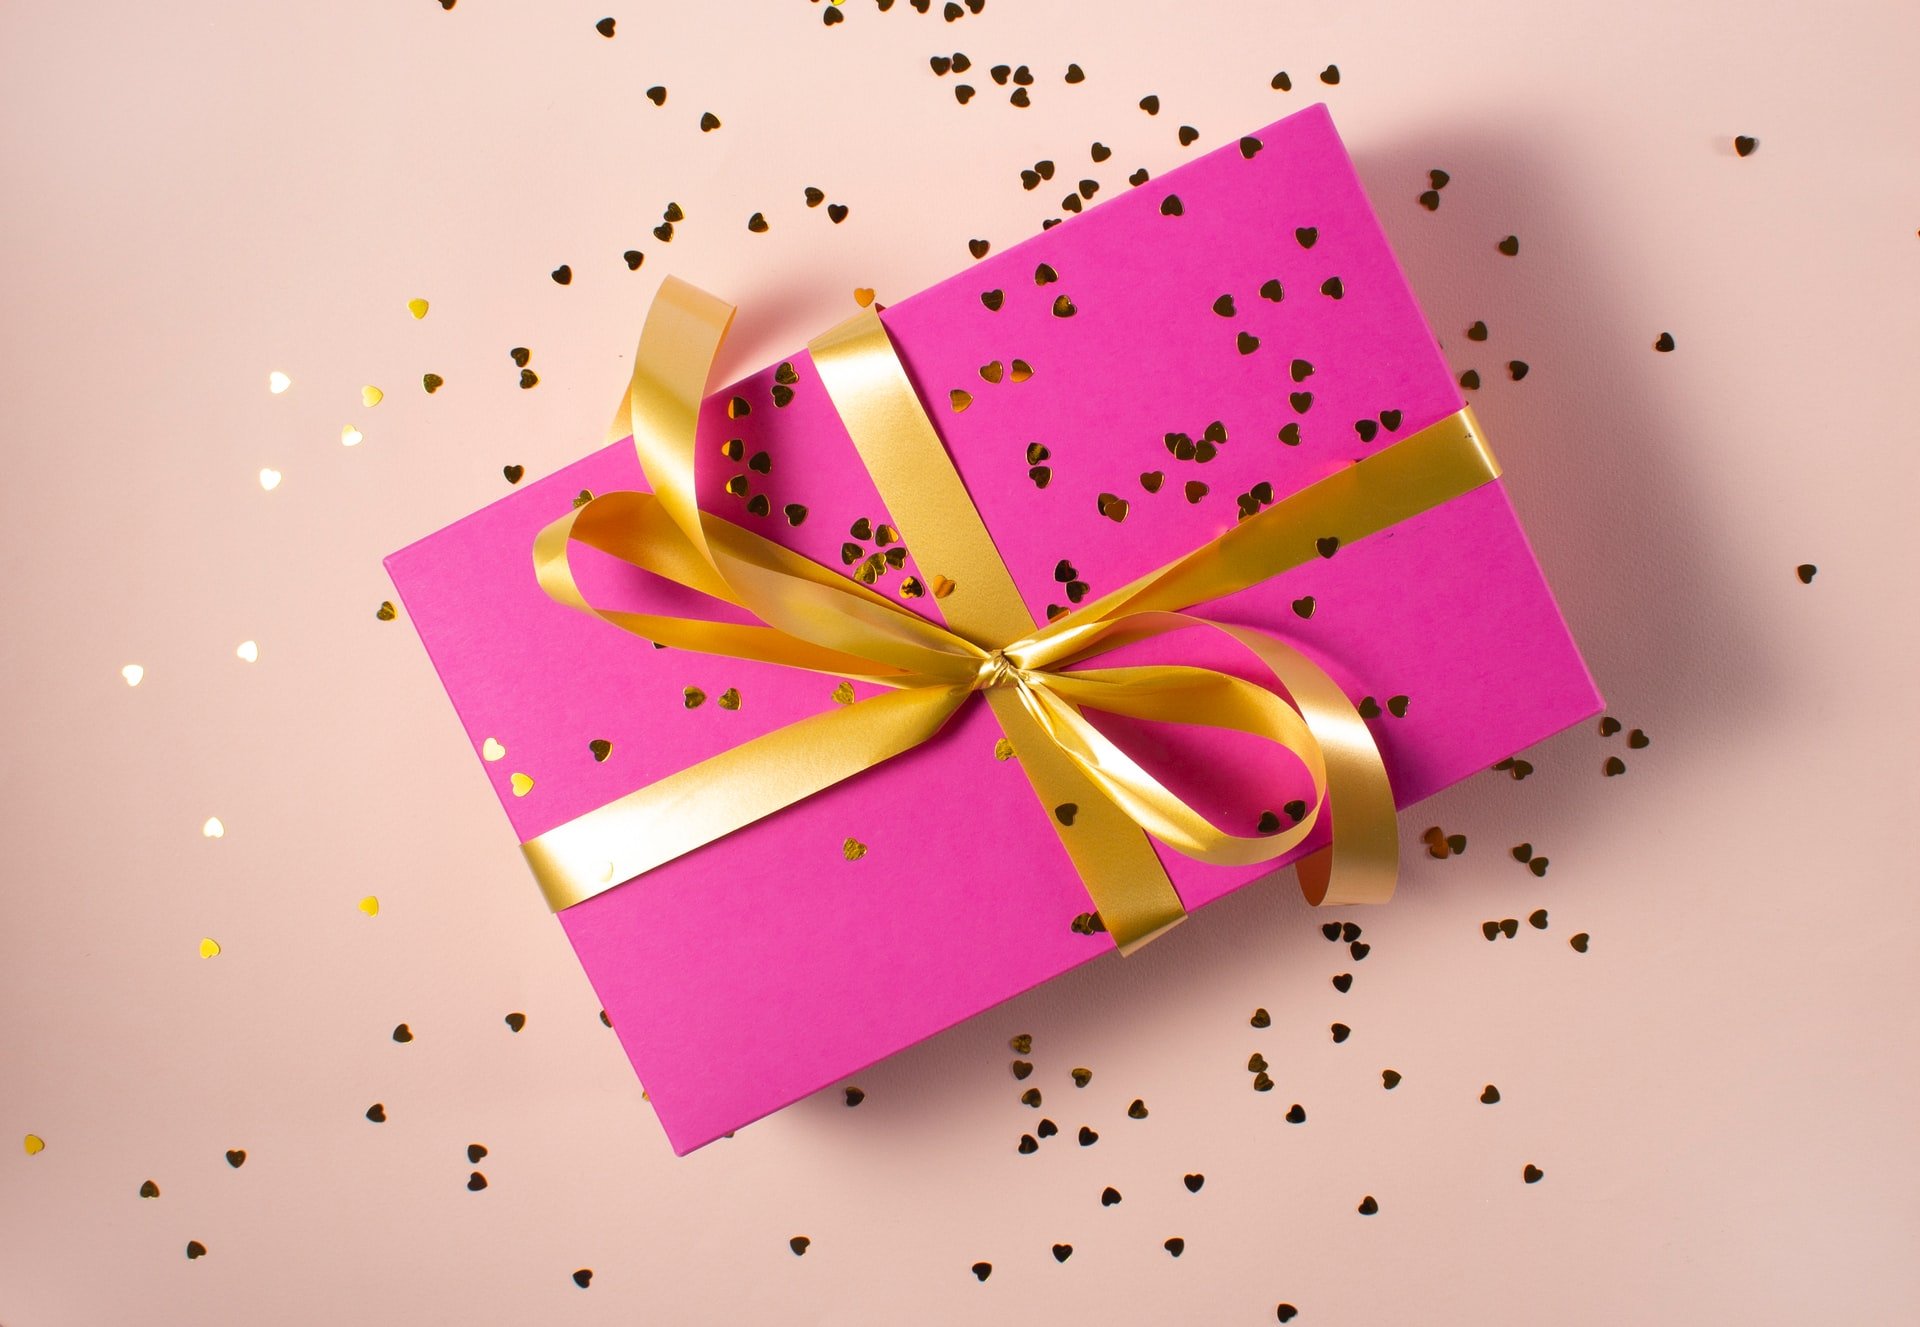 Geschenk in rosa Laken mit goldener Schleife verpackt | Quelle: Unsplash